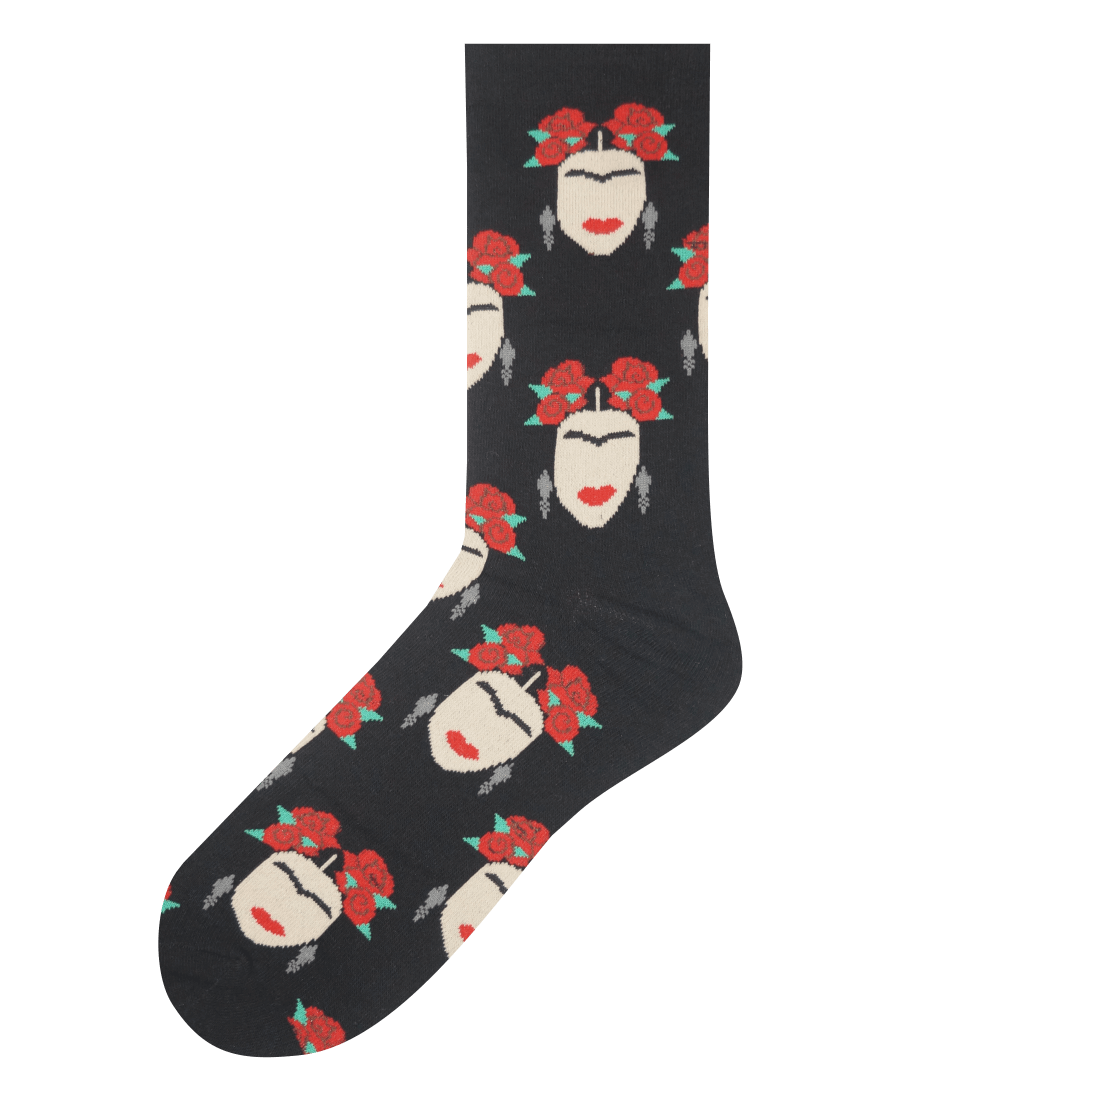 Medias Locas calcetines divertidos de diseño de Frida Kahlo Freaky Socks. Medias Frida Kahlo